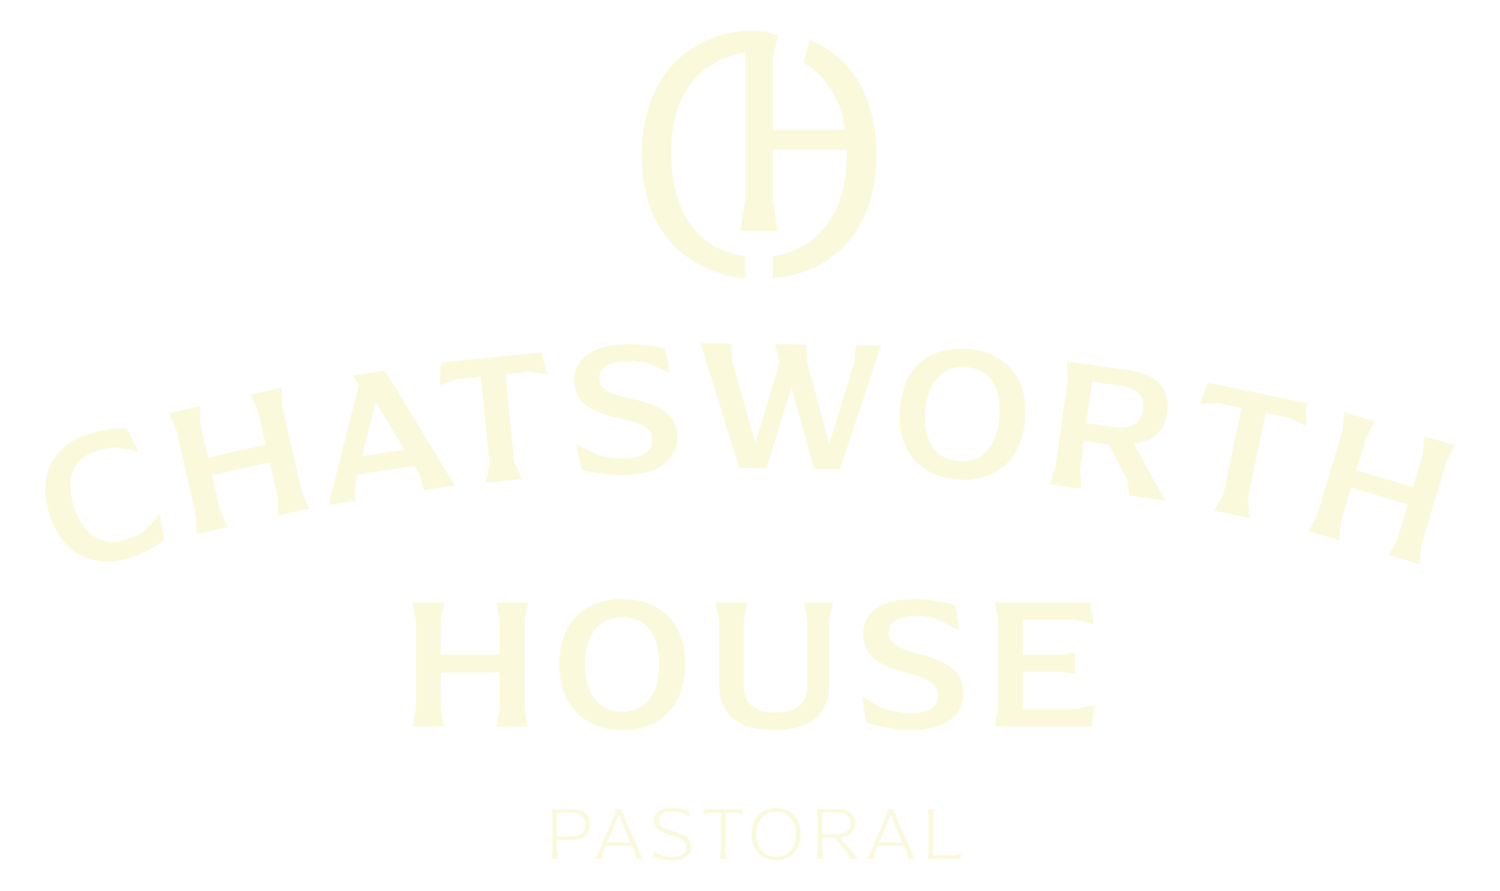 Chatsworth House Pastoral